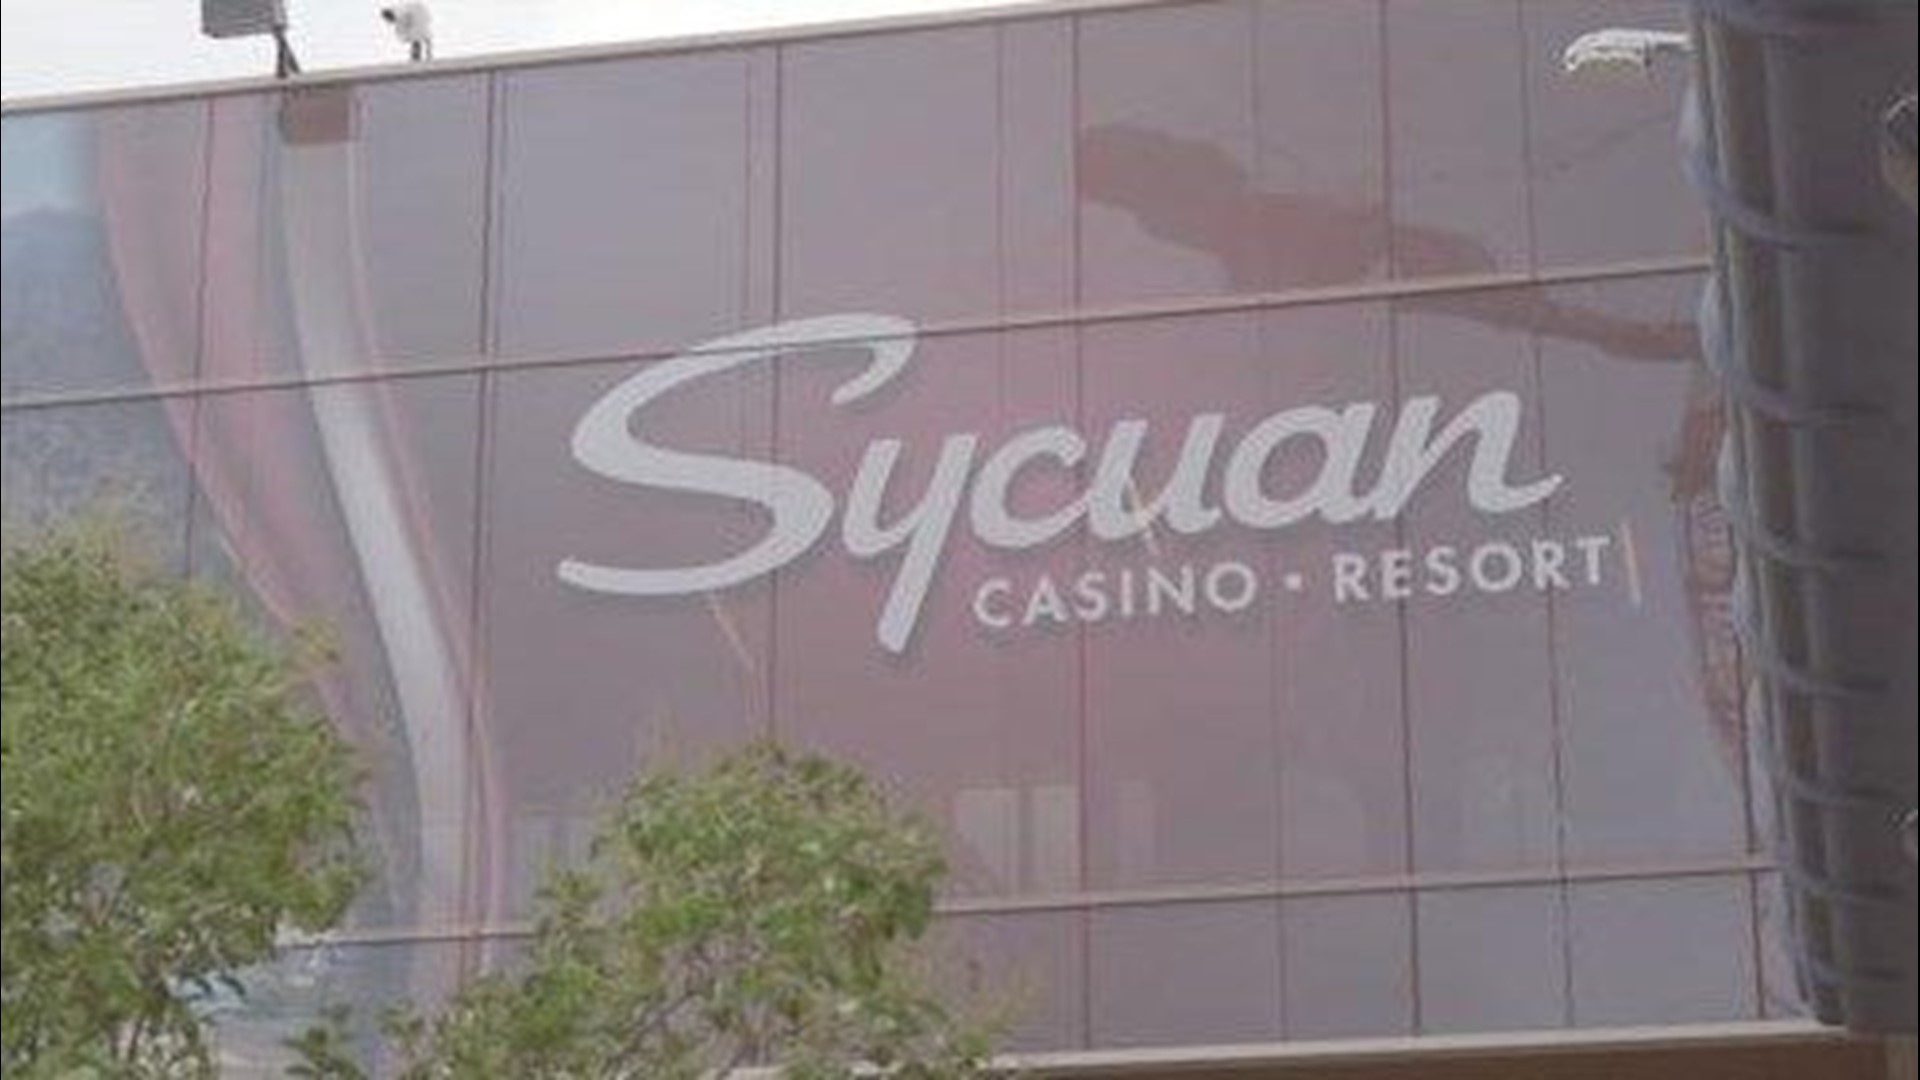 is sycuan casino closing